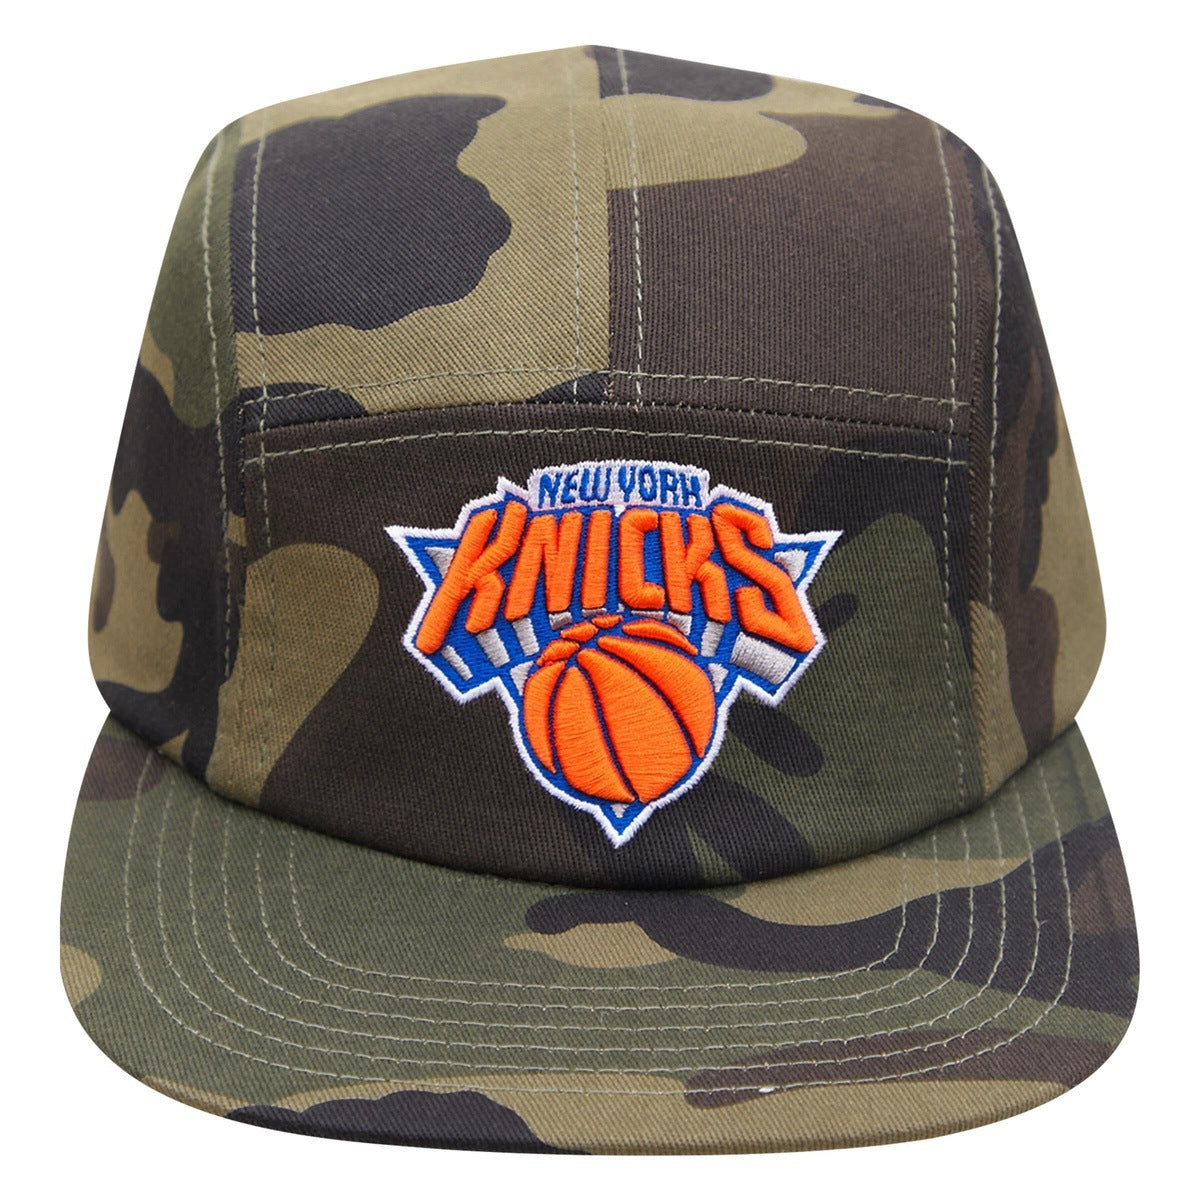 NBA NEW YORK KNICKS UNISEX 5 PANEL LOGO CAMO HAT (CAMO)